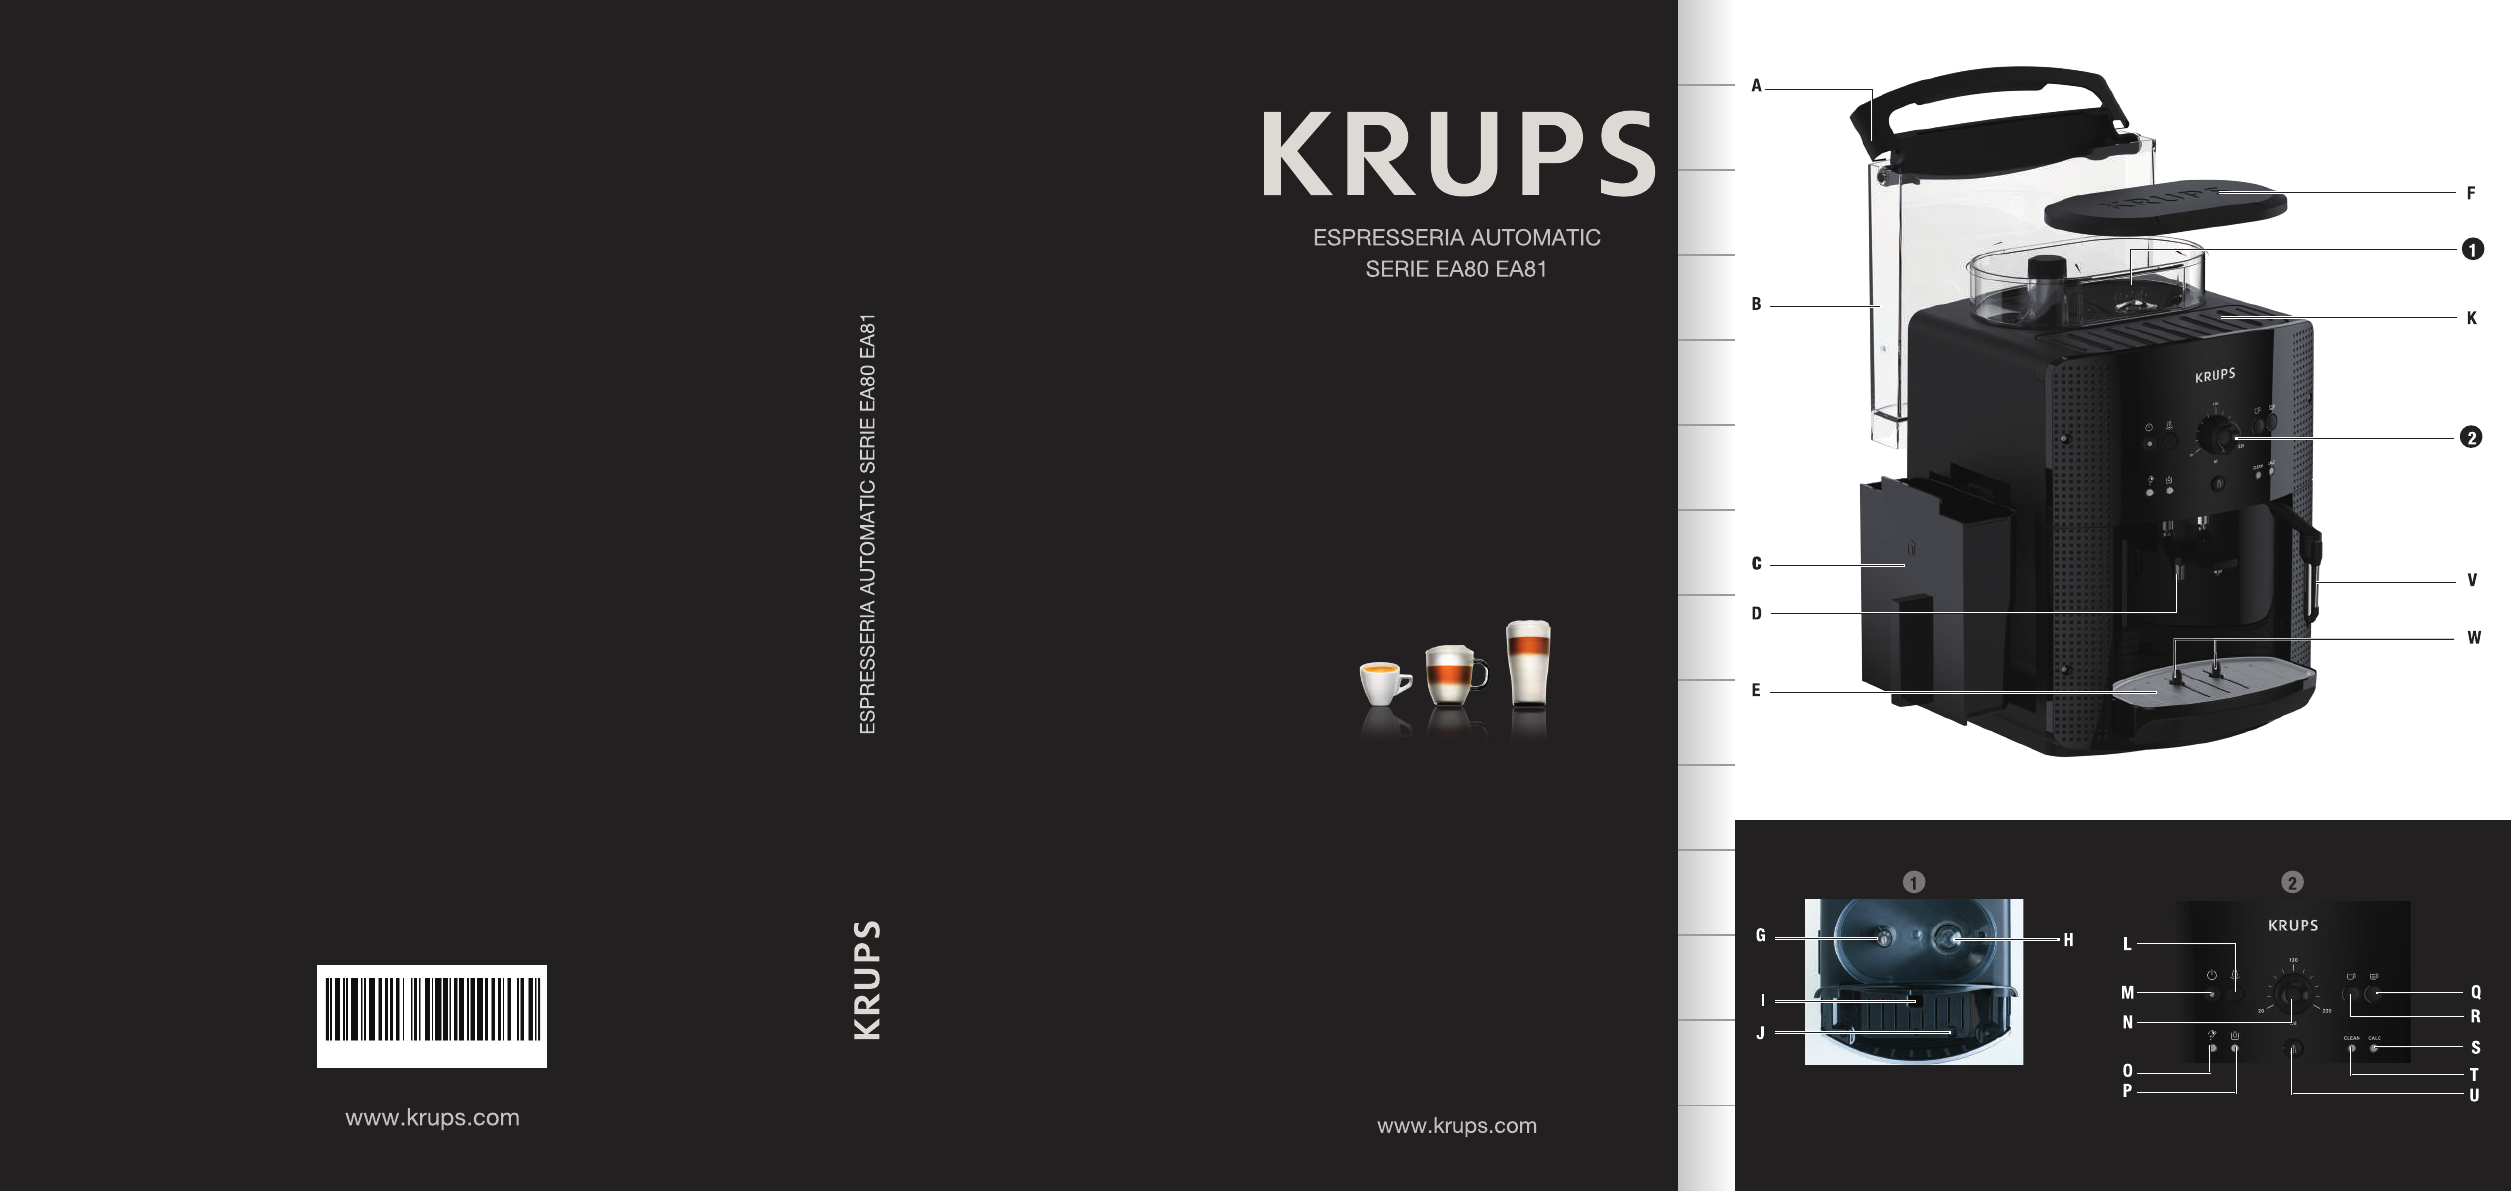 Handleiding Krups EA81 serie - ESPRESSERIA AUTOMATIC (pagina 1 van